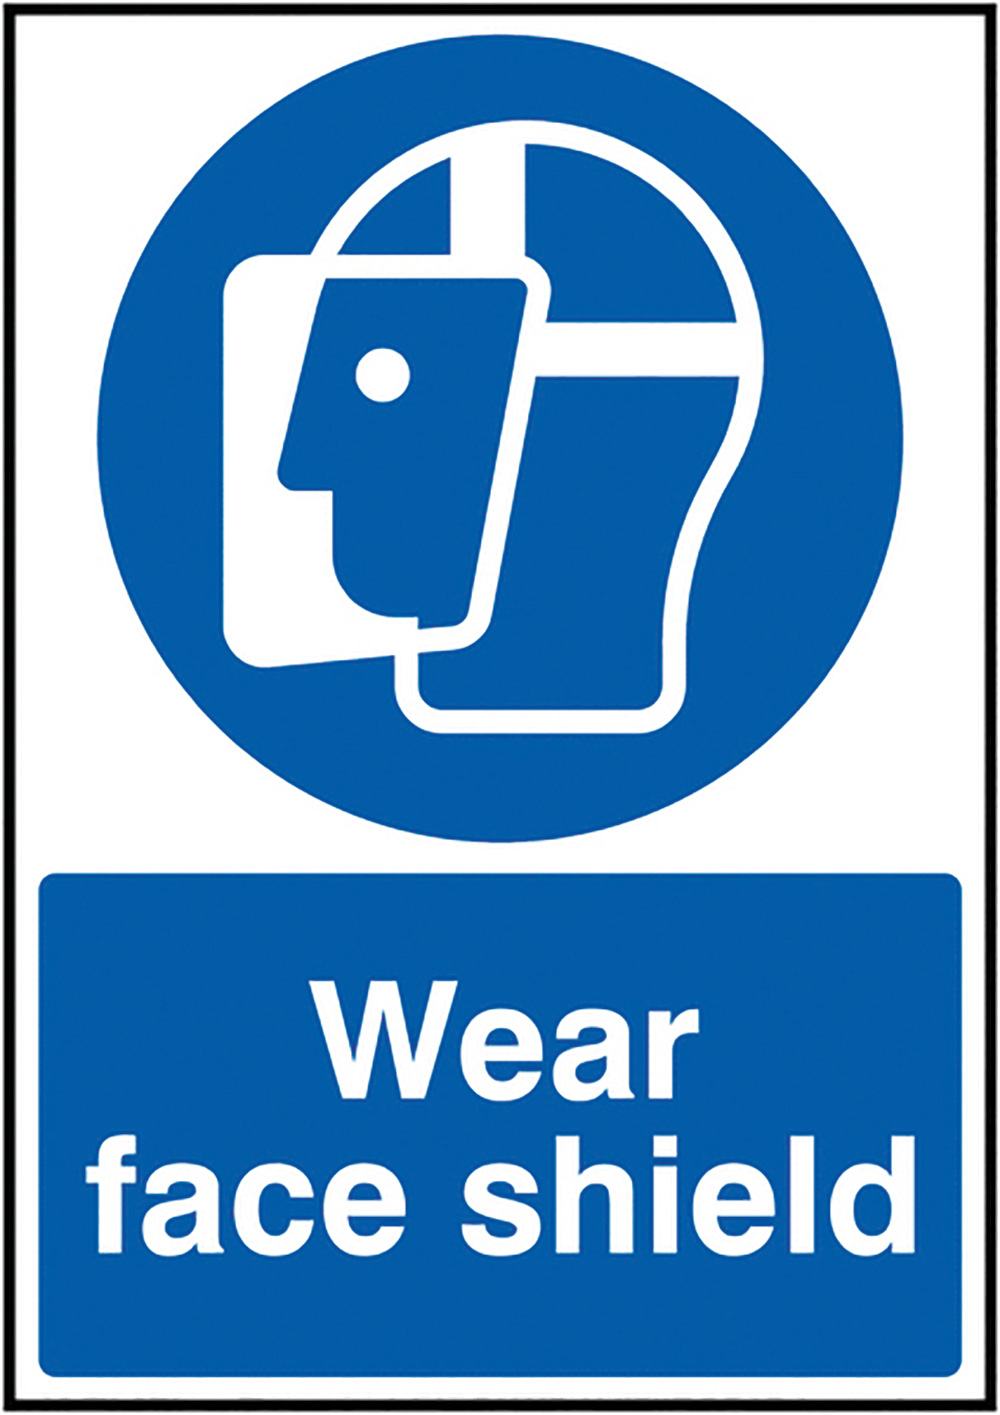 Wear Face Shield 100x250mm Rigid Plastic Safety Sign